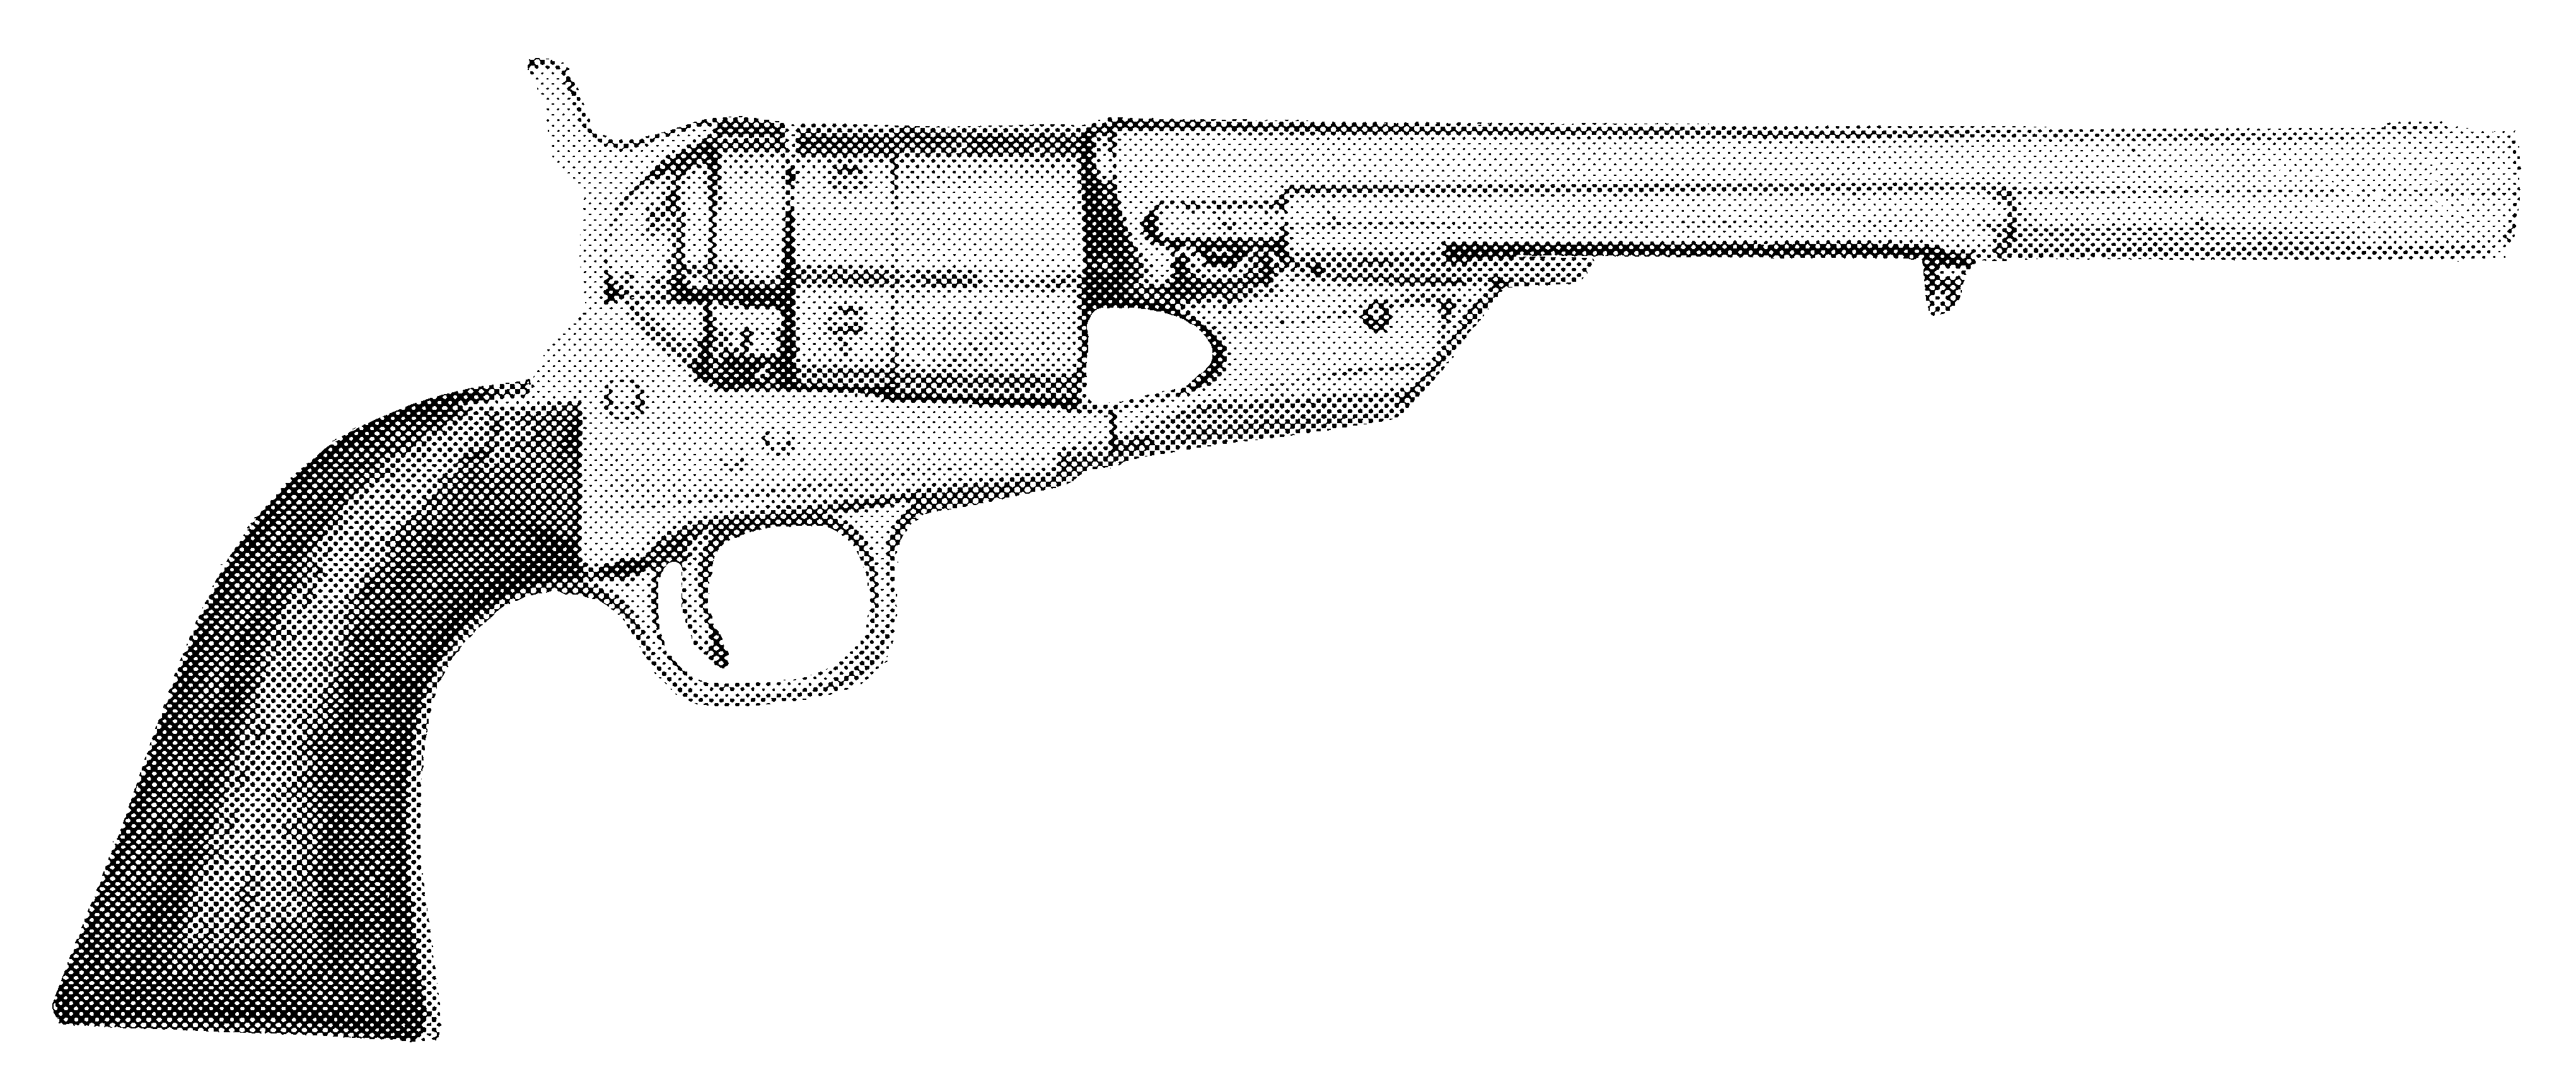 Richards Conversion, 1860 Army Revolver